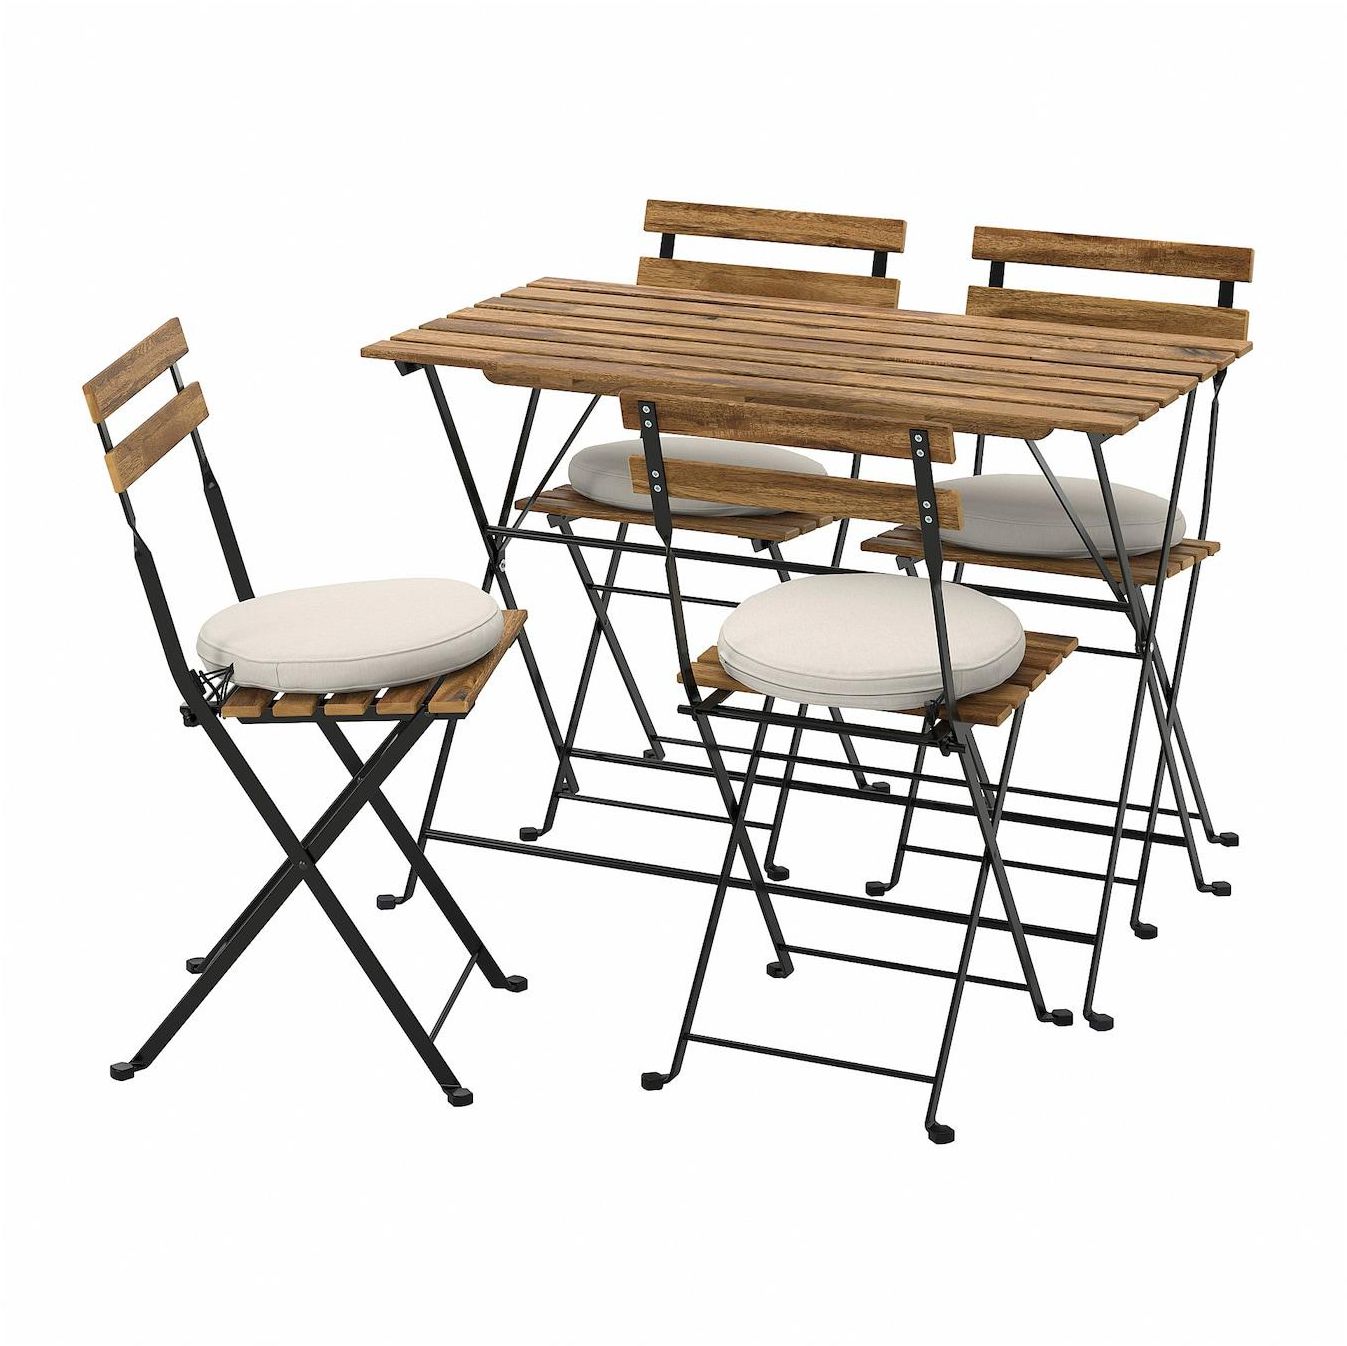 TÄRNÖ Table+4 chairs, outdoor - black/light brown stained/Frösön/Duvholmen beige